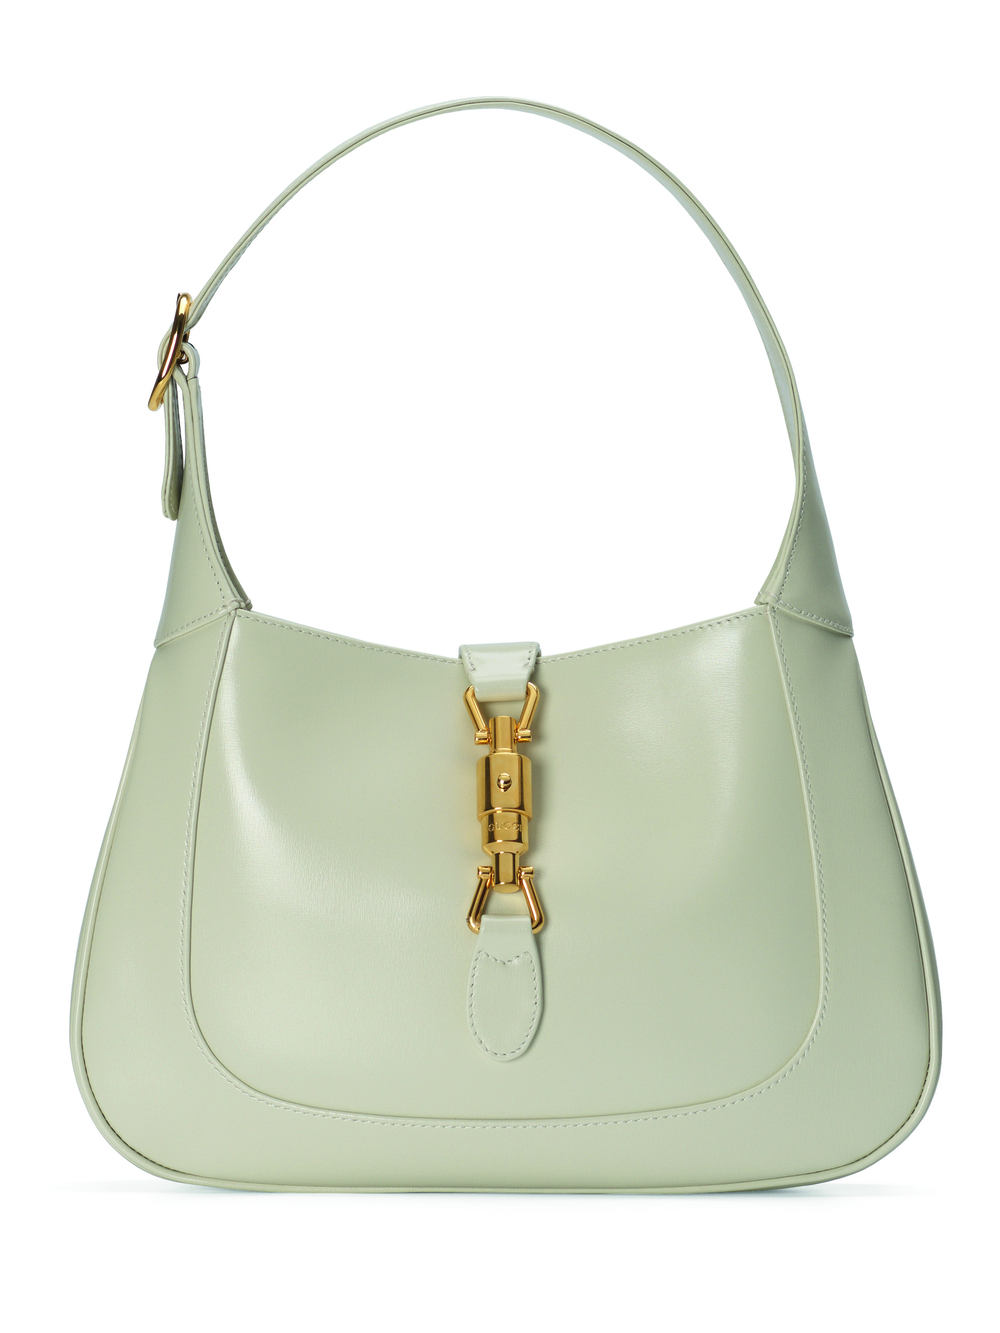 Gucci Jackie Bags - 1961 Signature Handbag Line